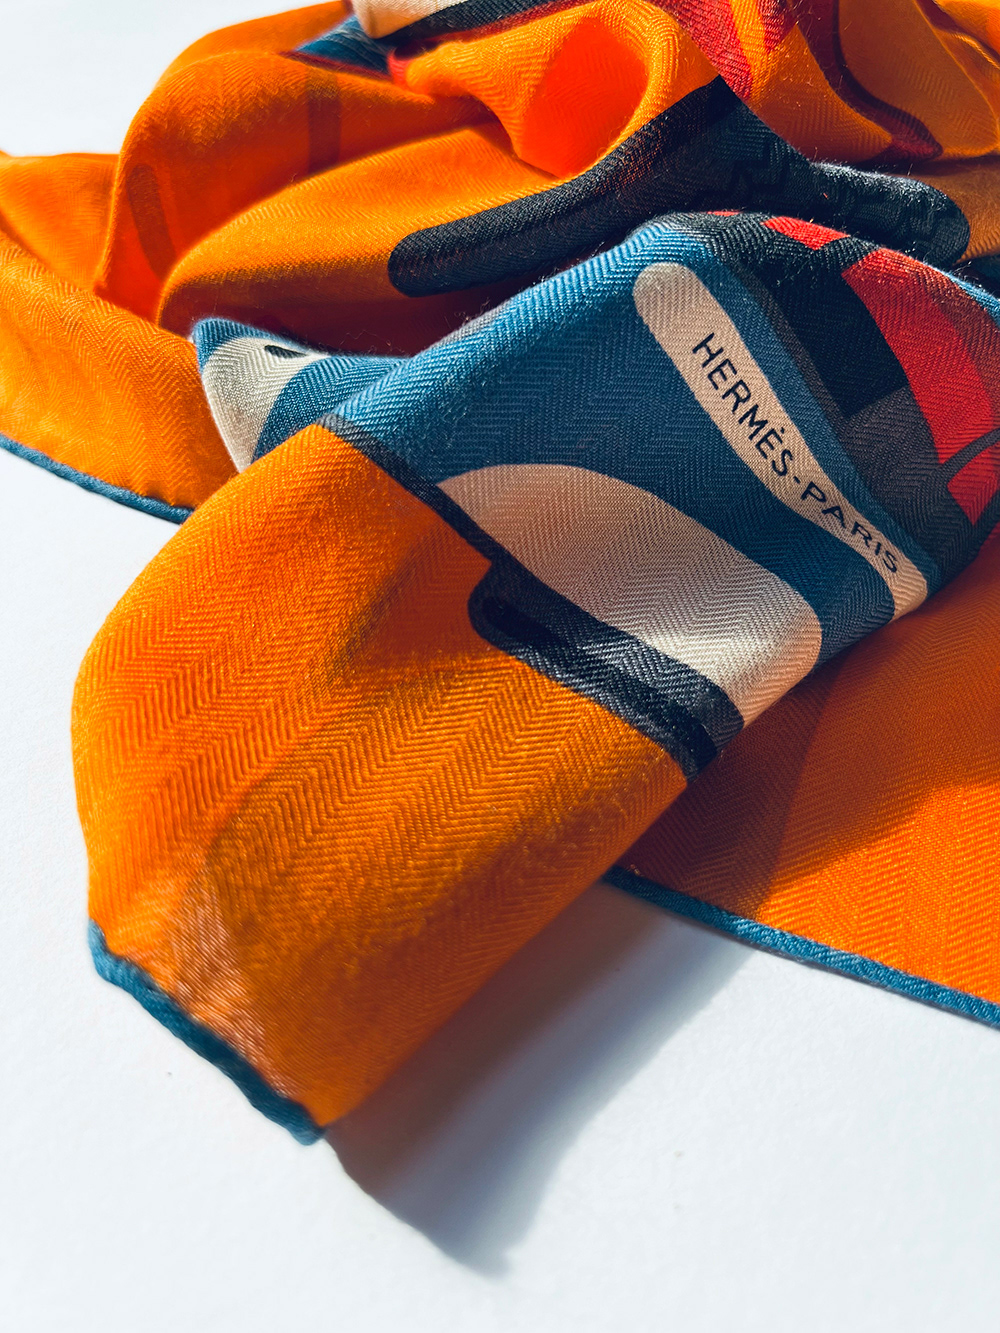 Hermès Paris scarf scarf design textile Fashion  moda Clothing ILLUSTRATION  horse Formula 1